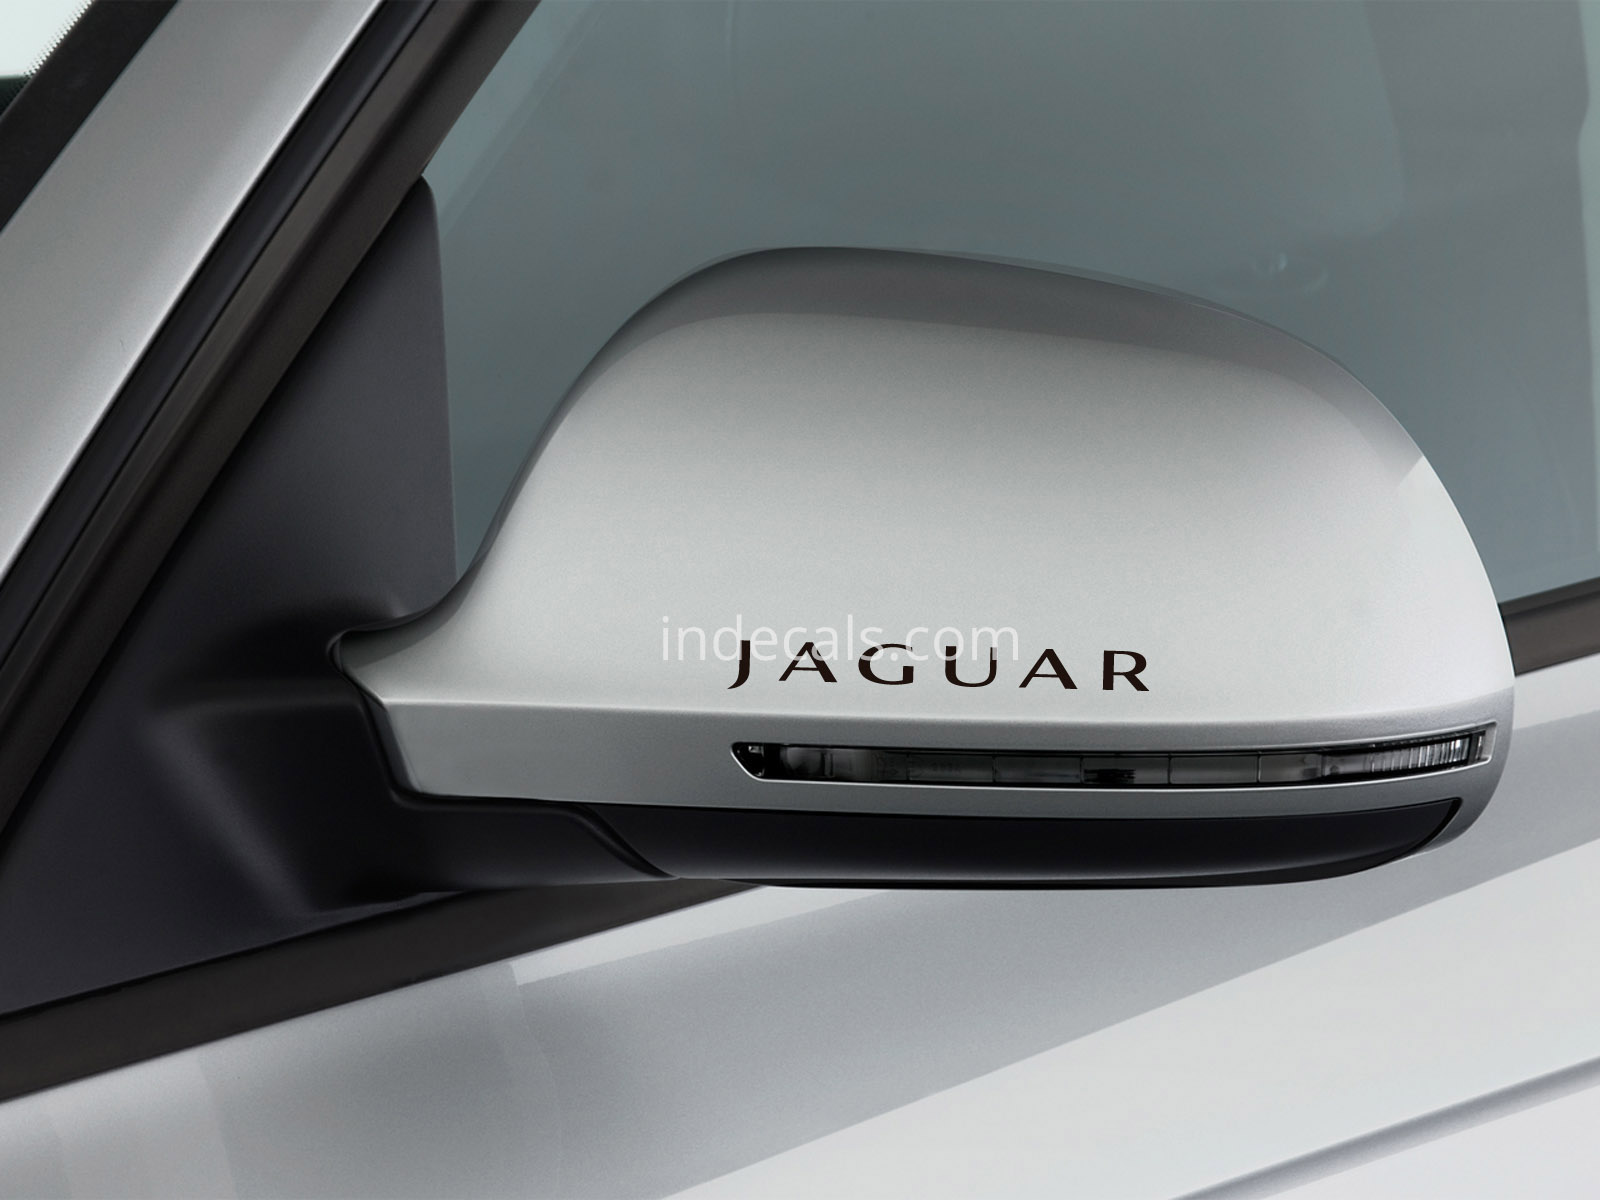 3 x Jaguar Stickers for Mirrors - Black